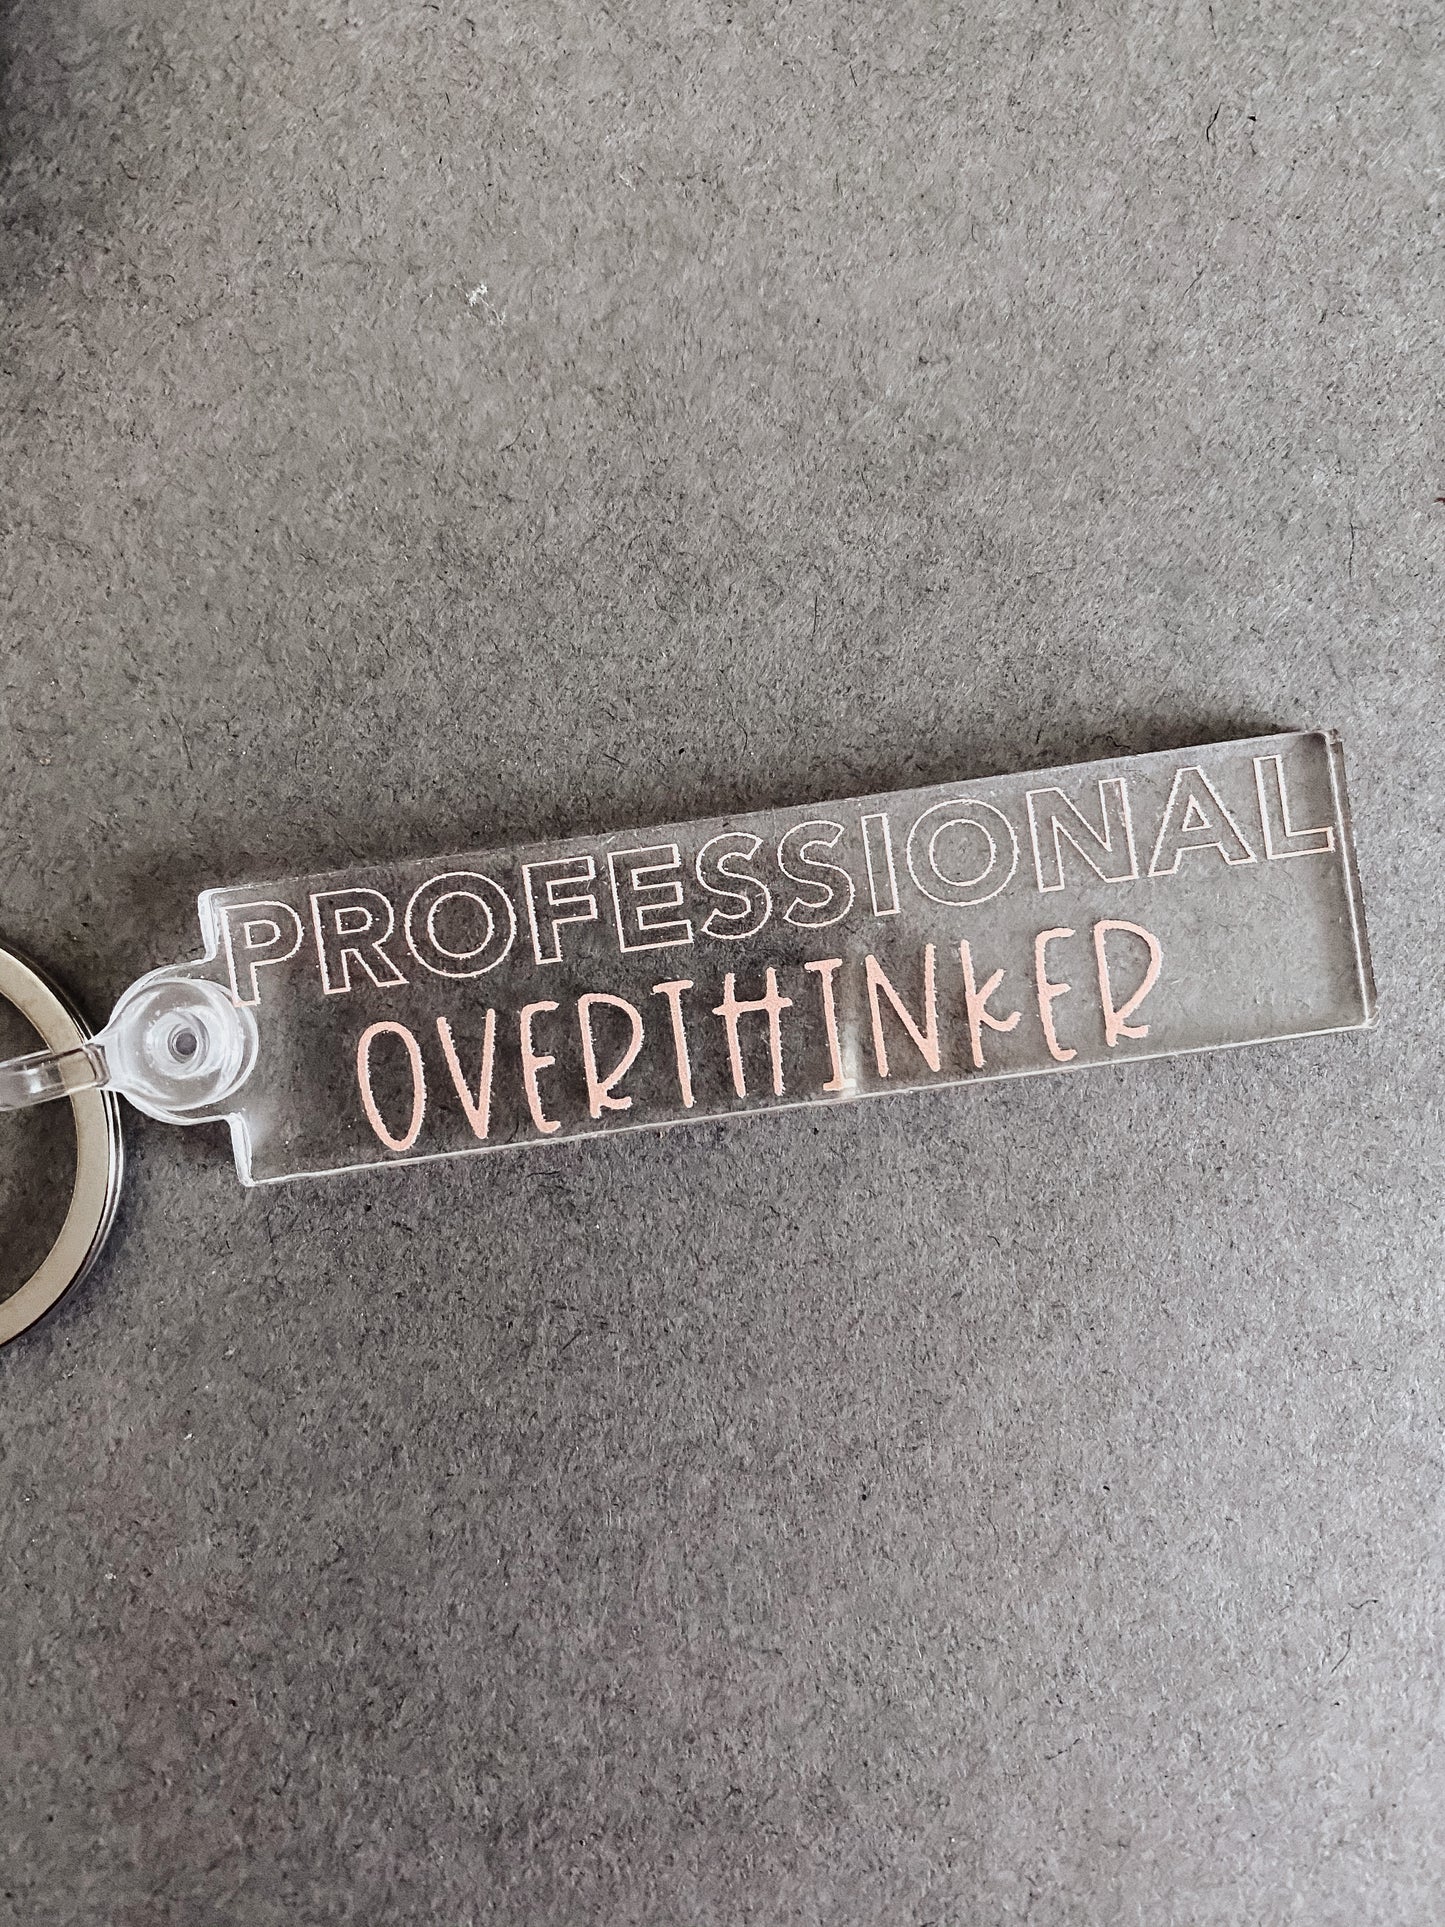 Professional Overthinker Acrylic Keychain